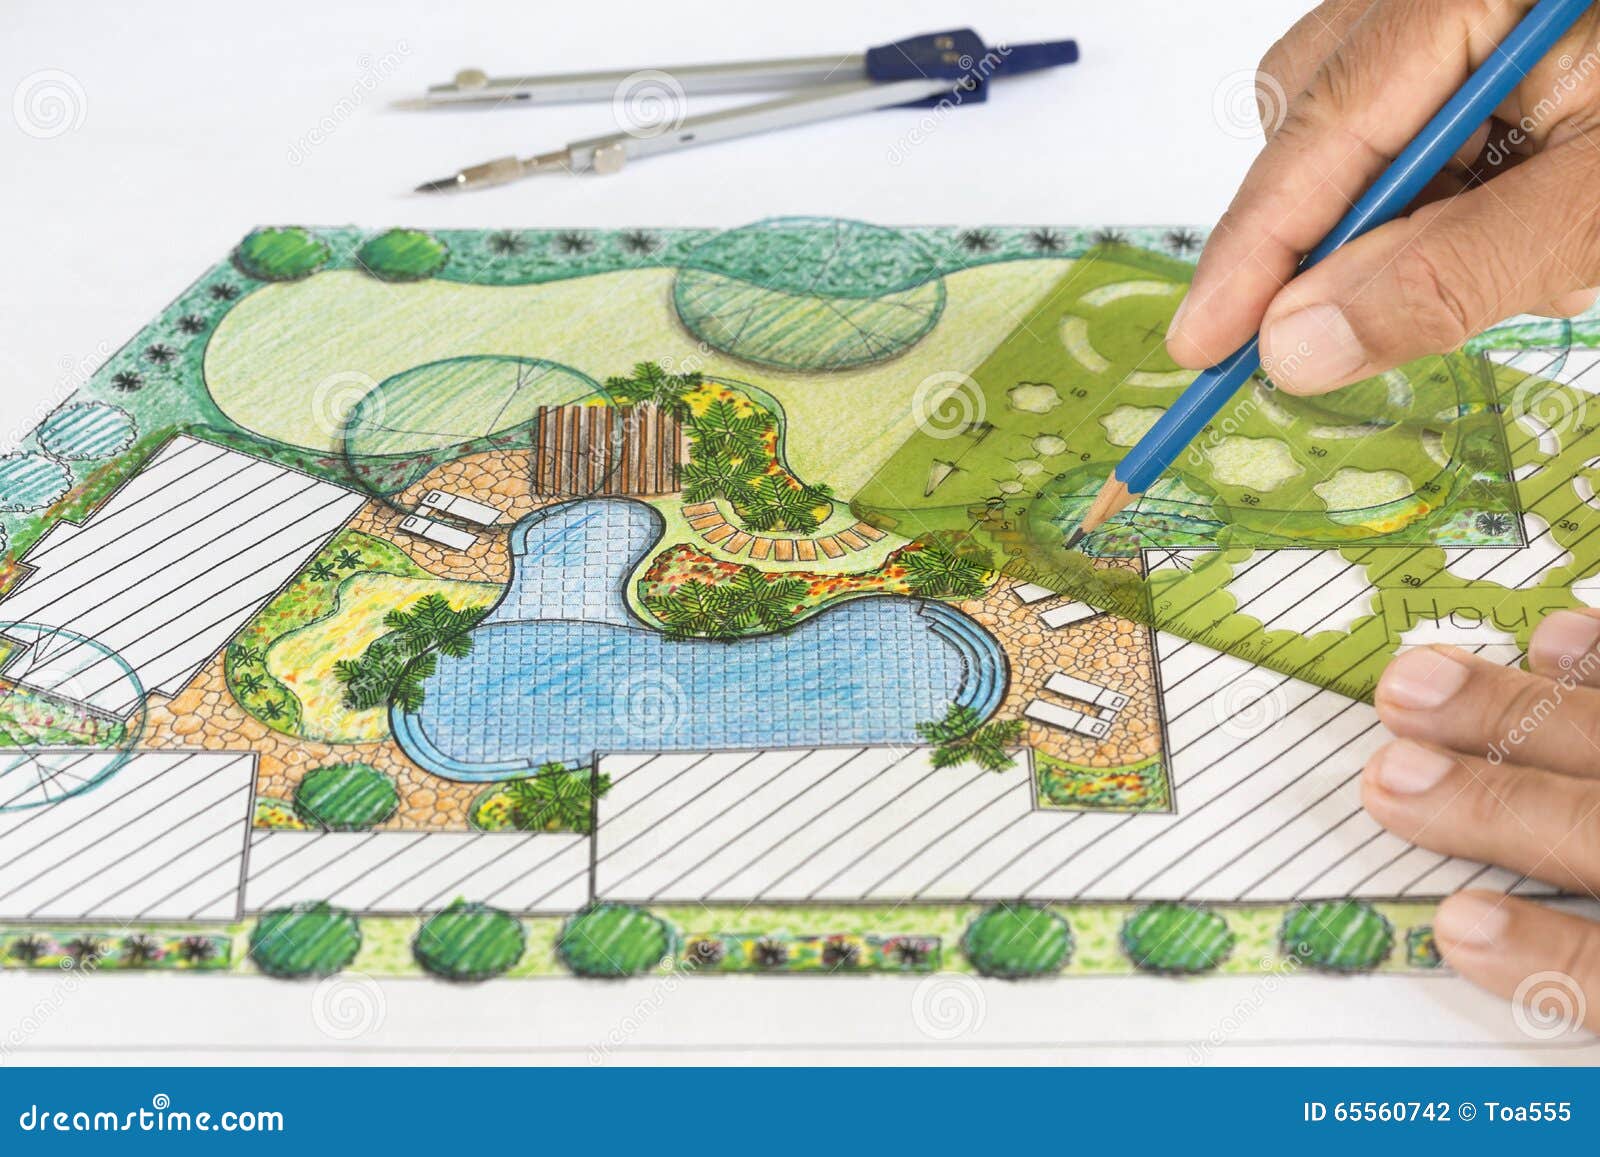 Landscape Architect Design Backyard Plan Stock Photo ...